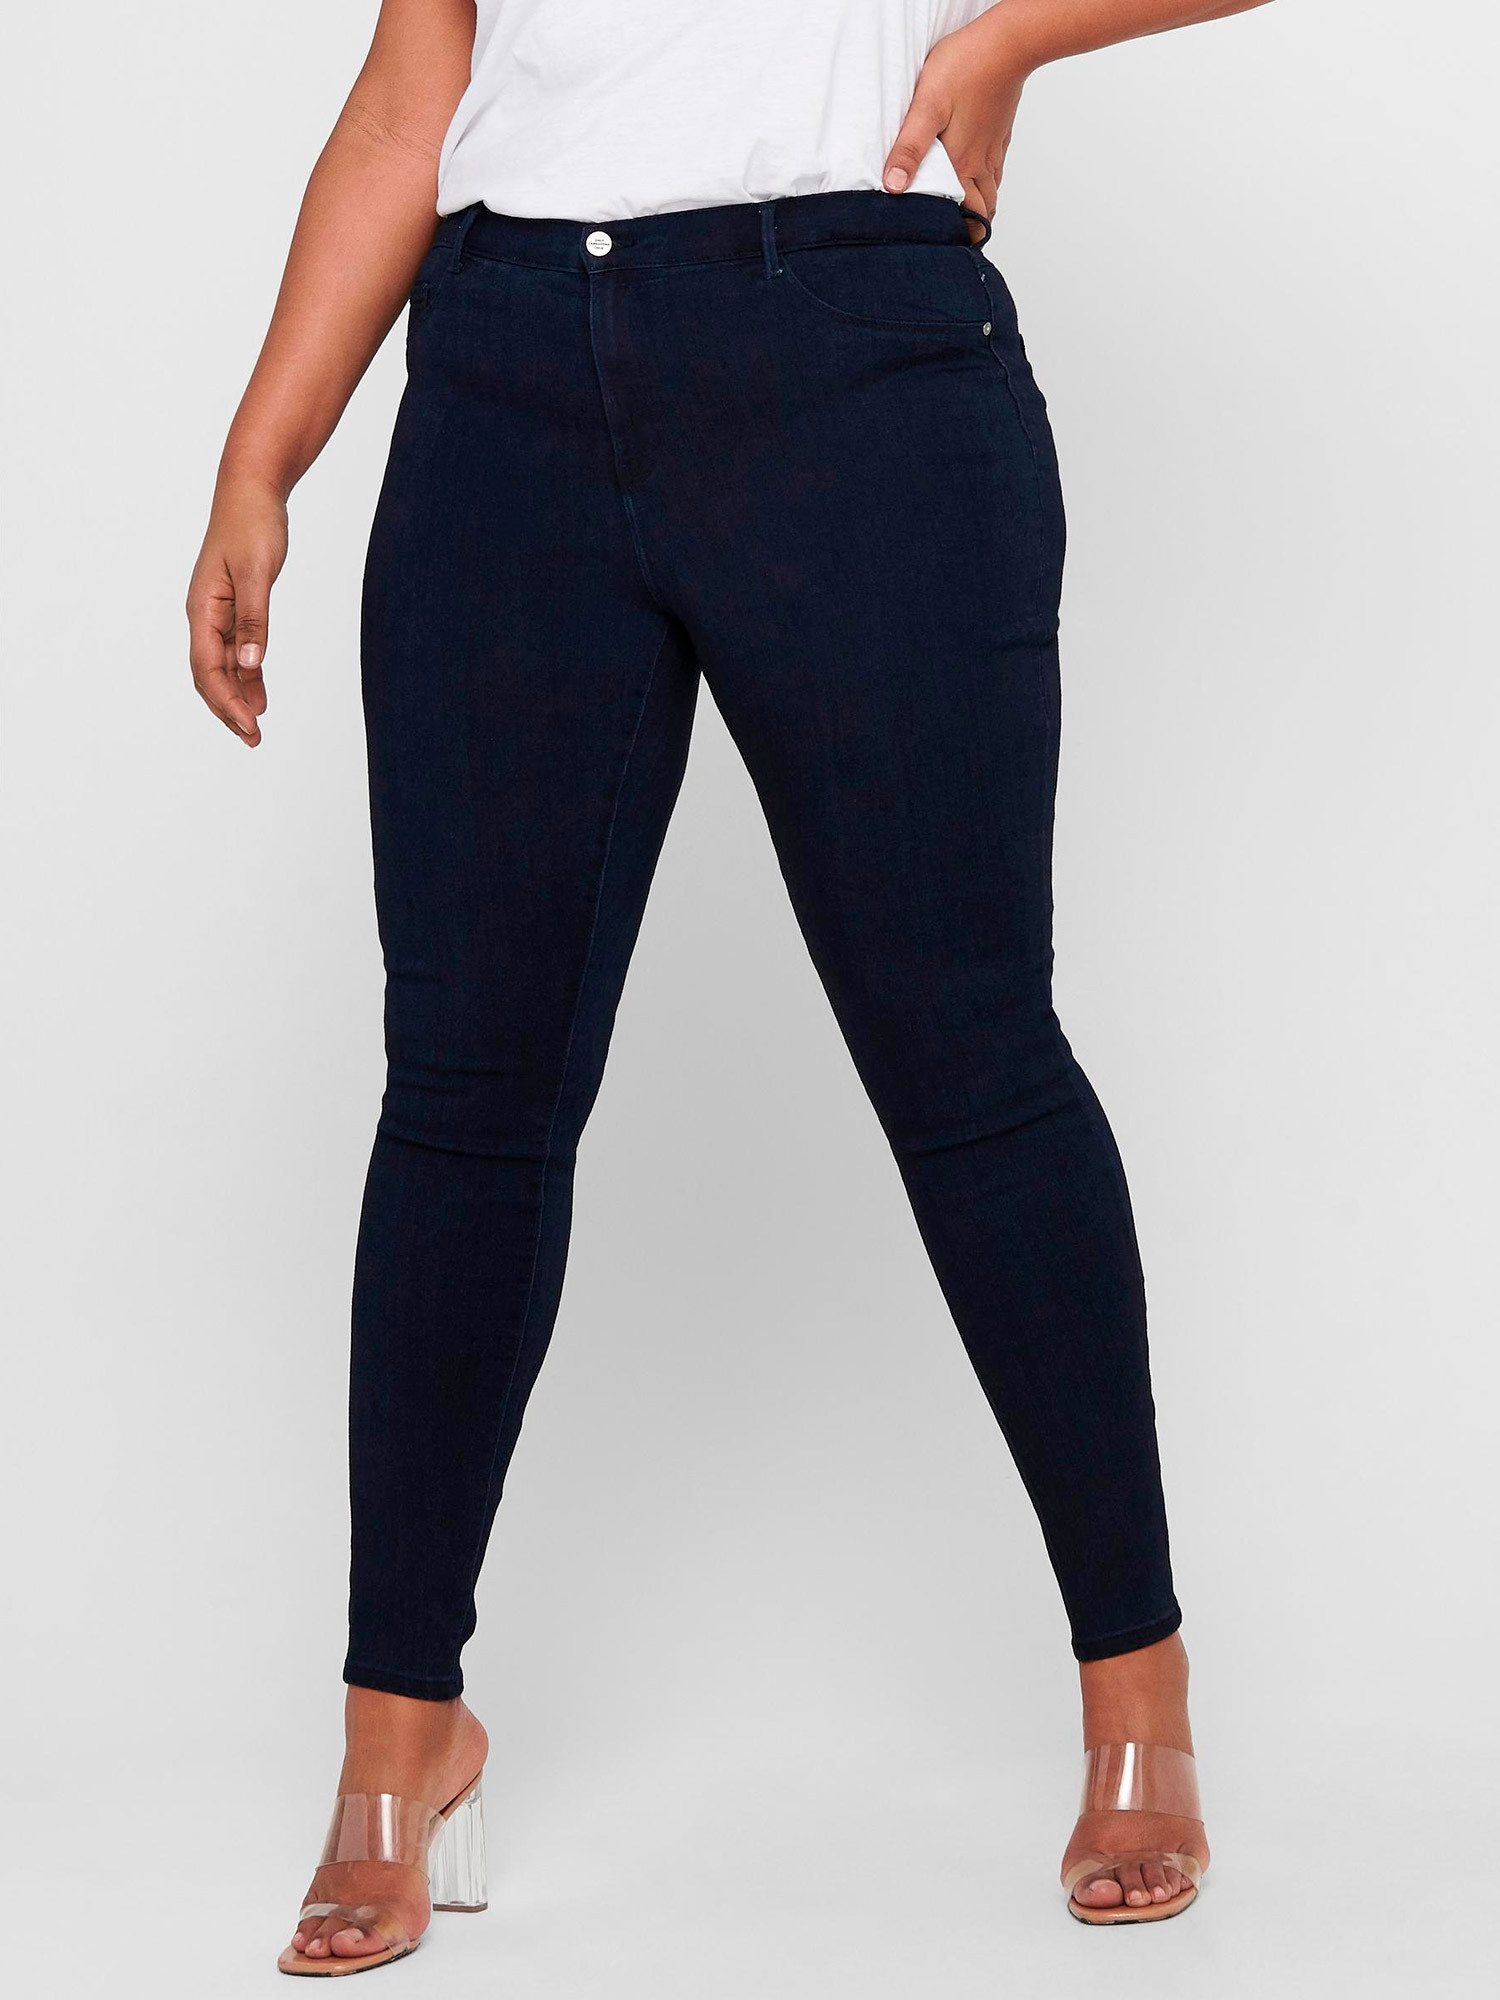  Car AUGUSTA - Lyseblå jeans i bomullsdenim med cool detaljer